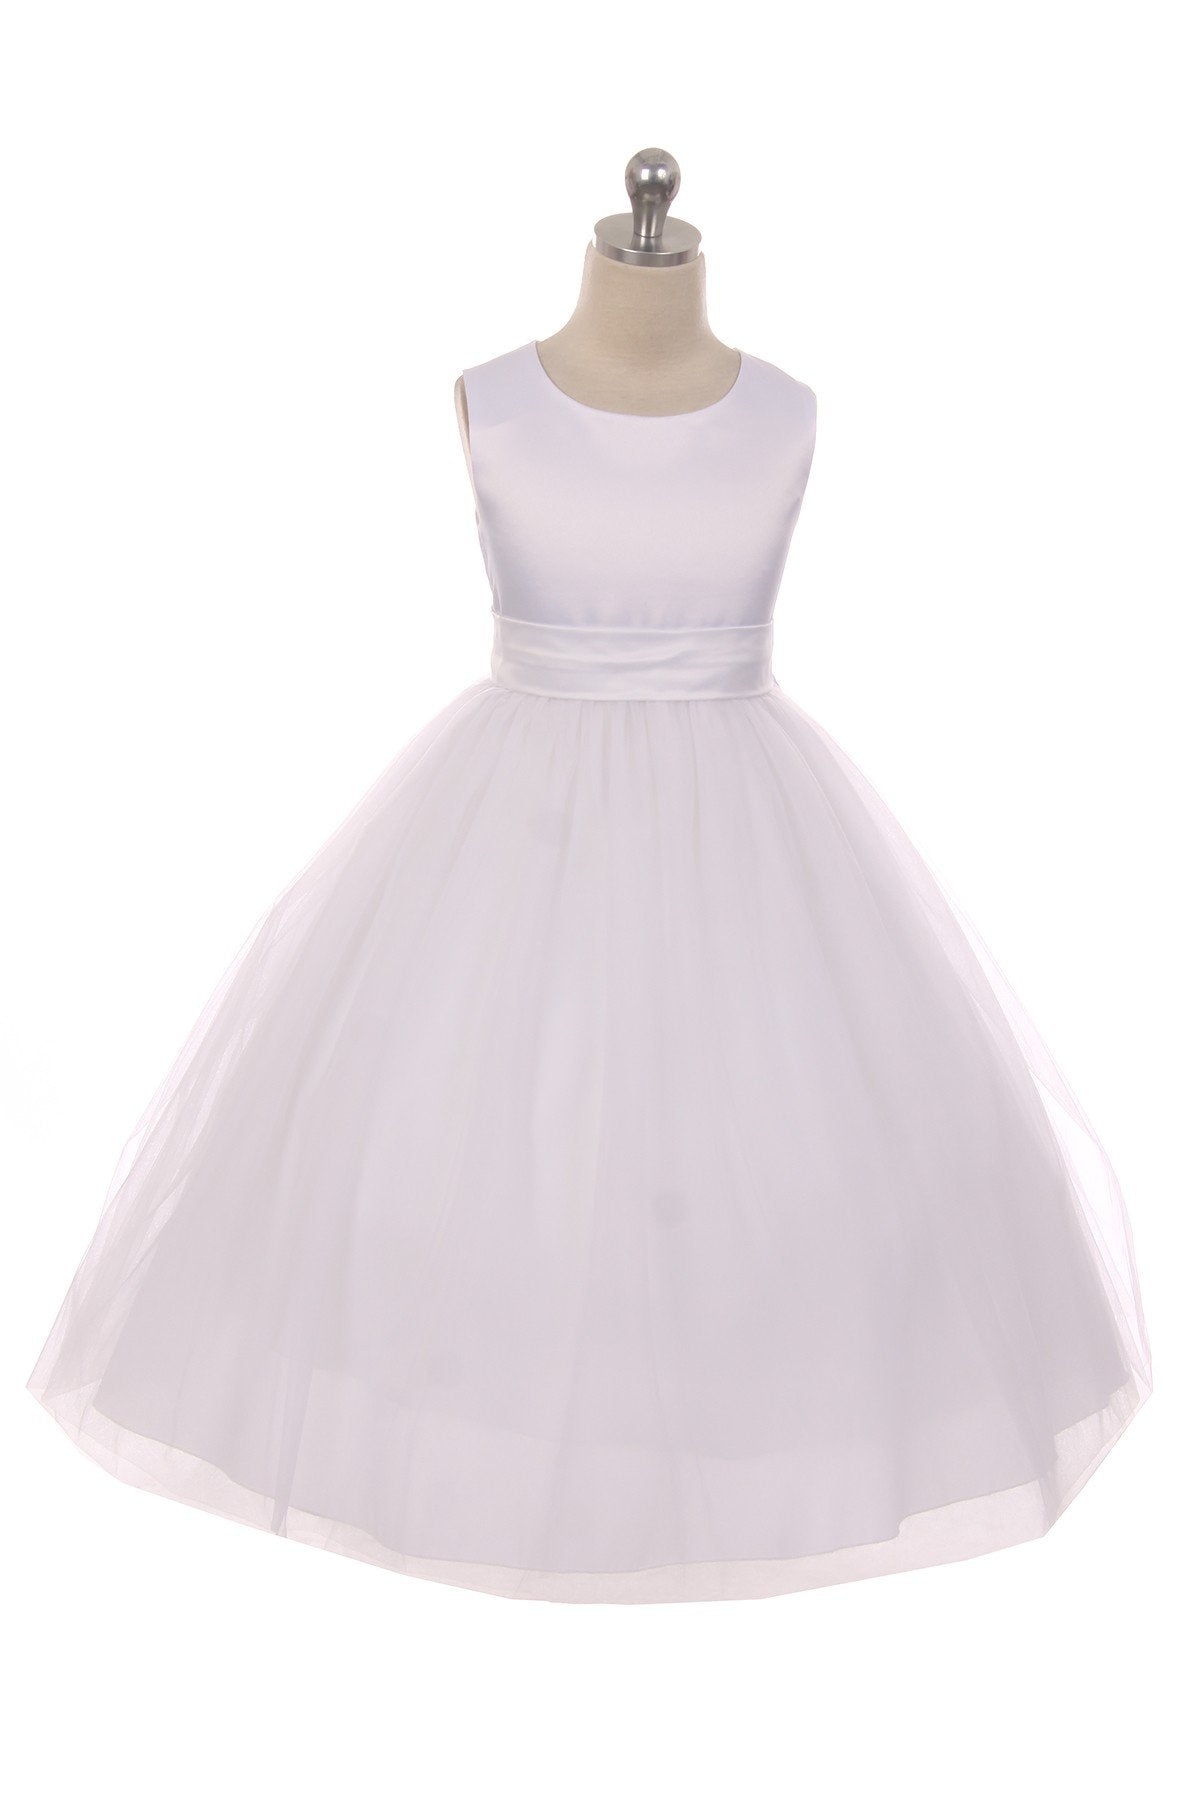 Dress - Satin Sash Bow Girl Dress (White Dress)